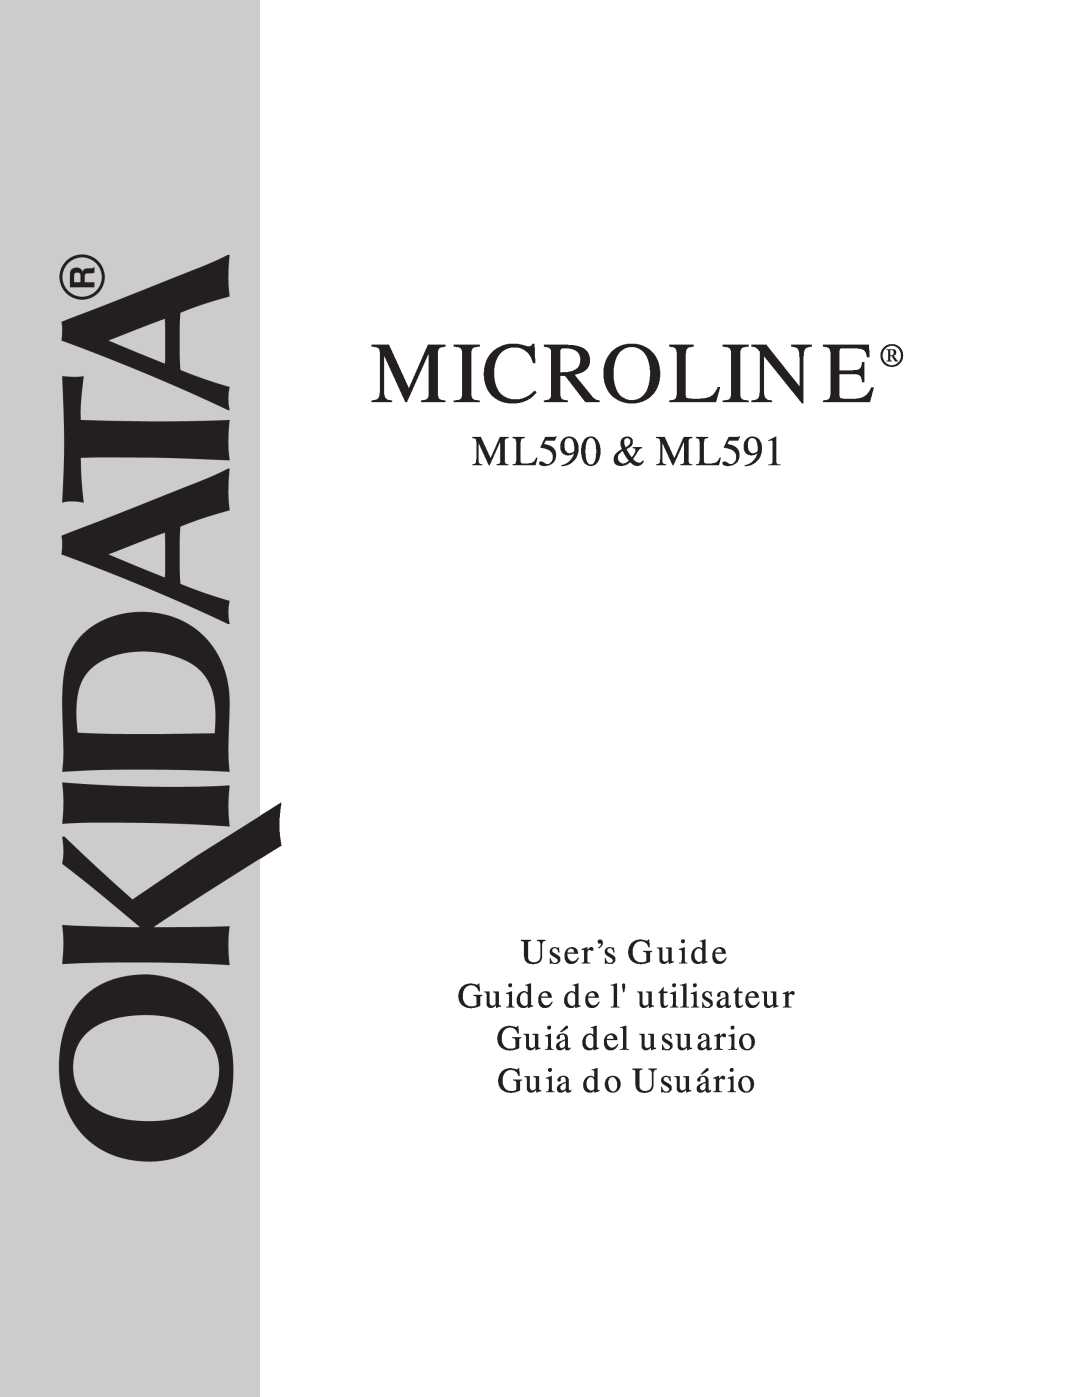 Oki manual Microline, ML590 & ML591, User’s Guide, Guide de l utilisateur Guiá del usuario Guia do Usuário 